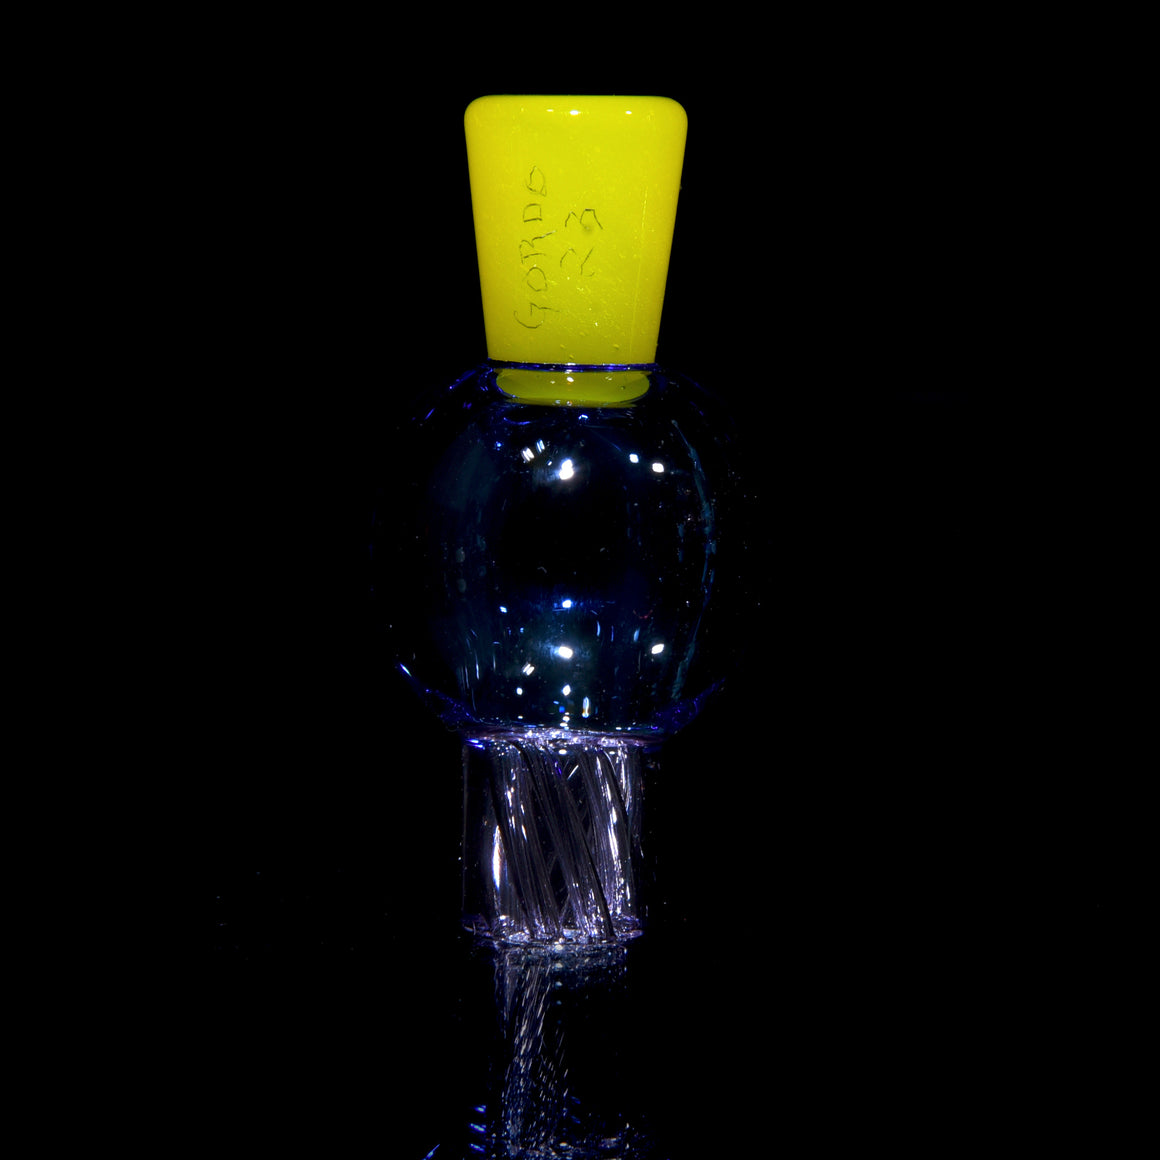 Full-color Ti Signed RipTide Bubble Cap - Nightshade/Blue Dream/Lemon Drop